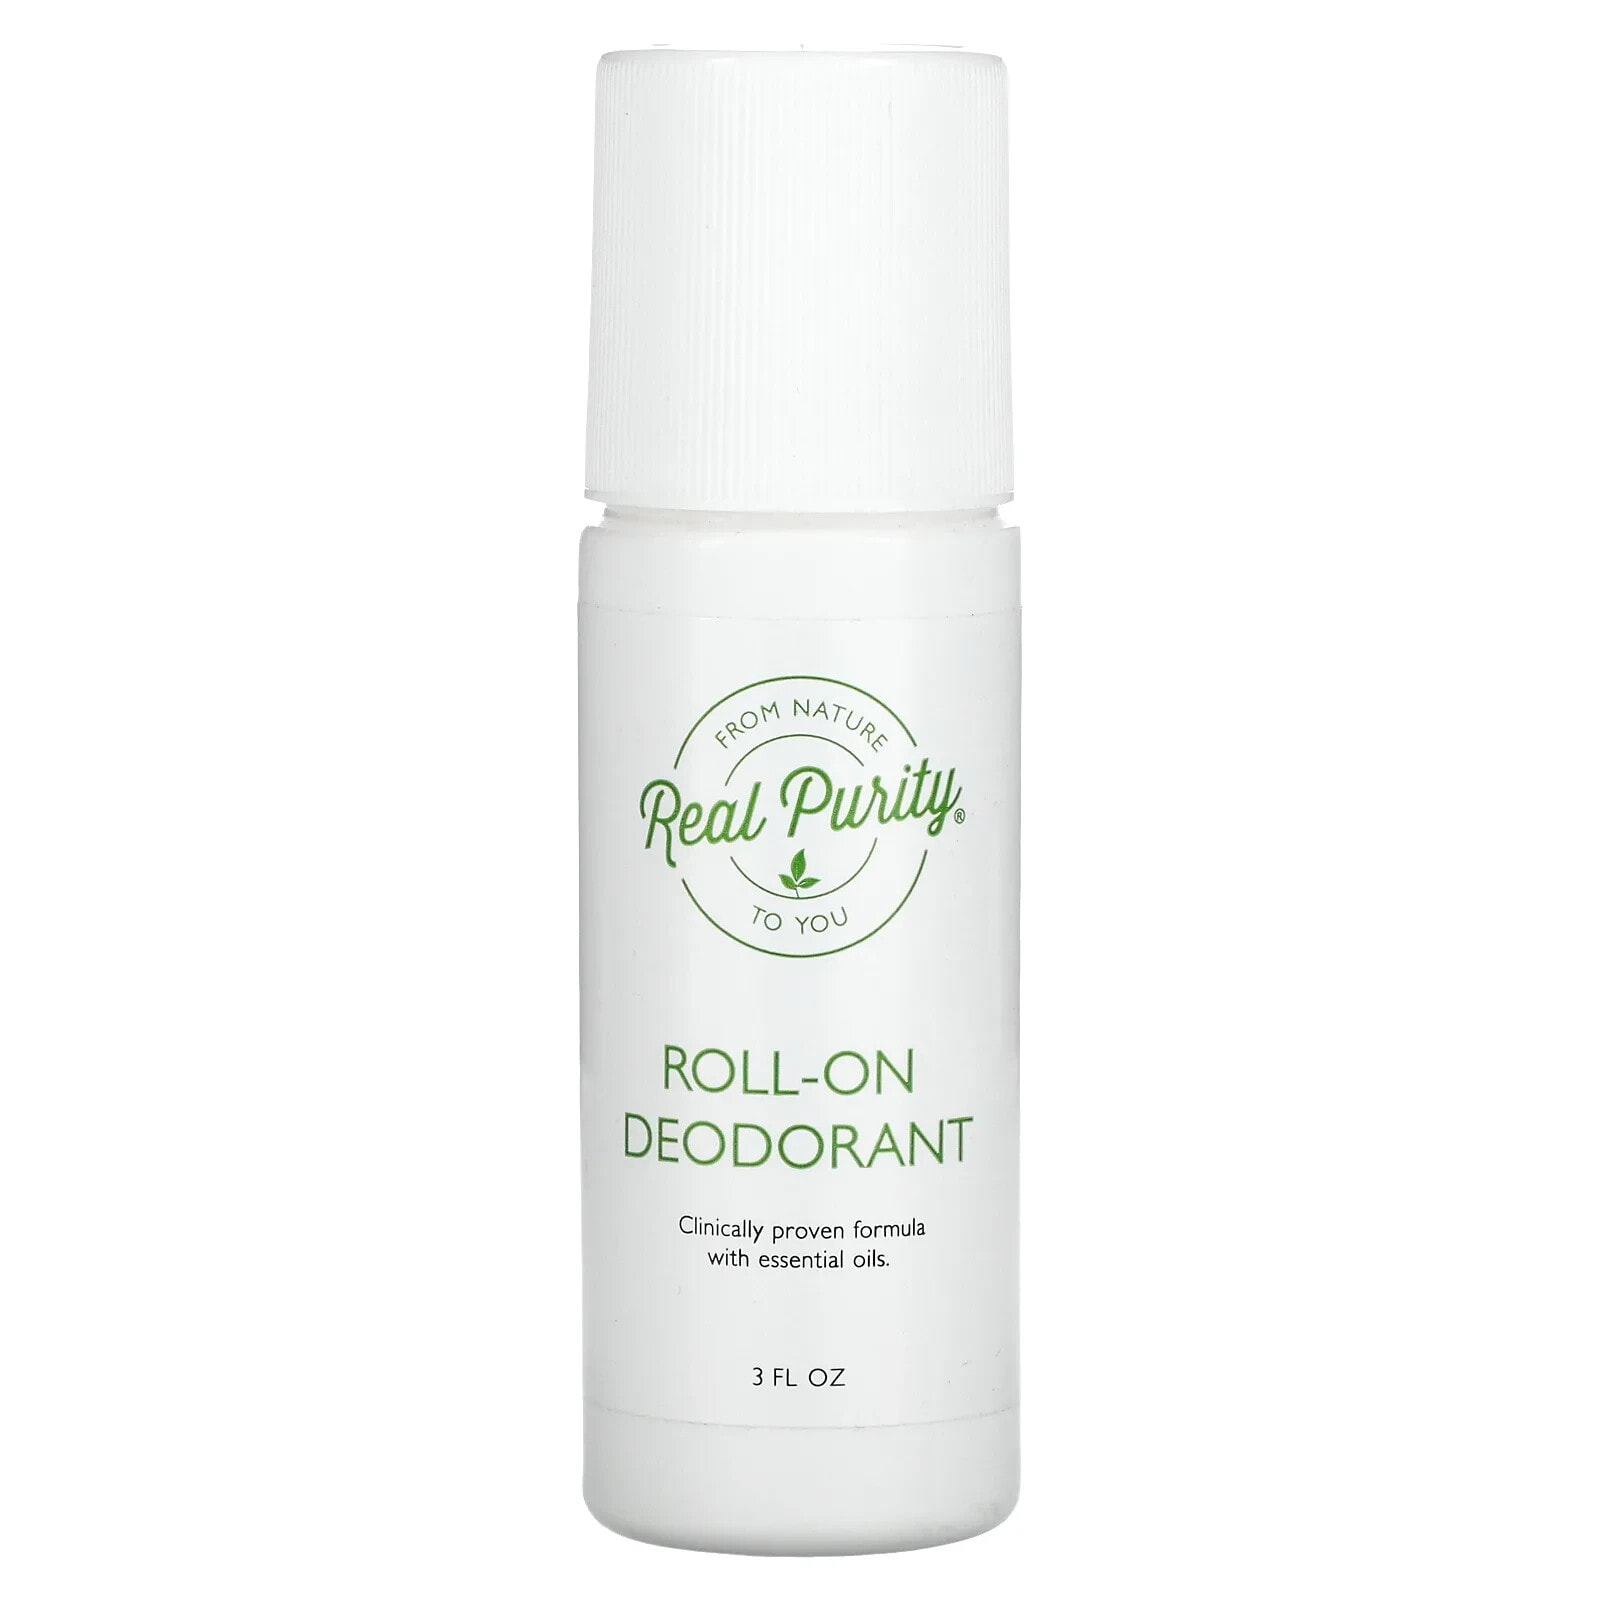 Roll-On Deodorant, 3 fl oz